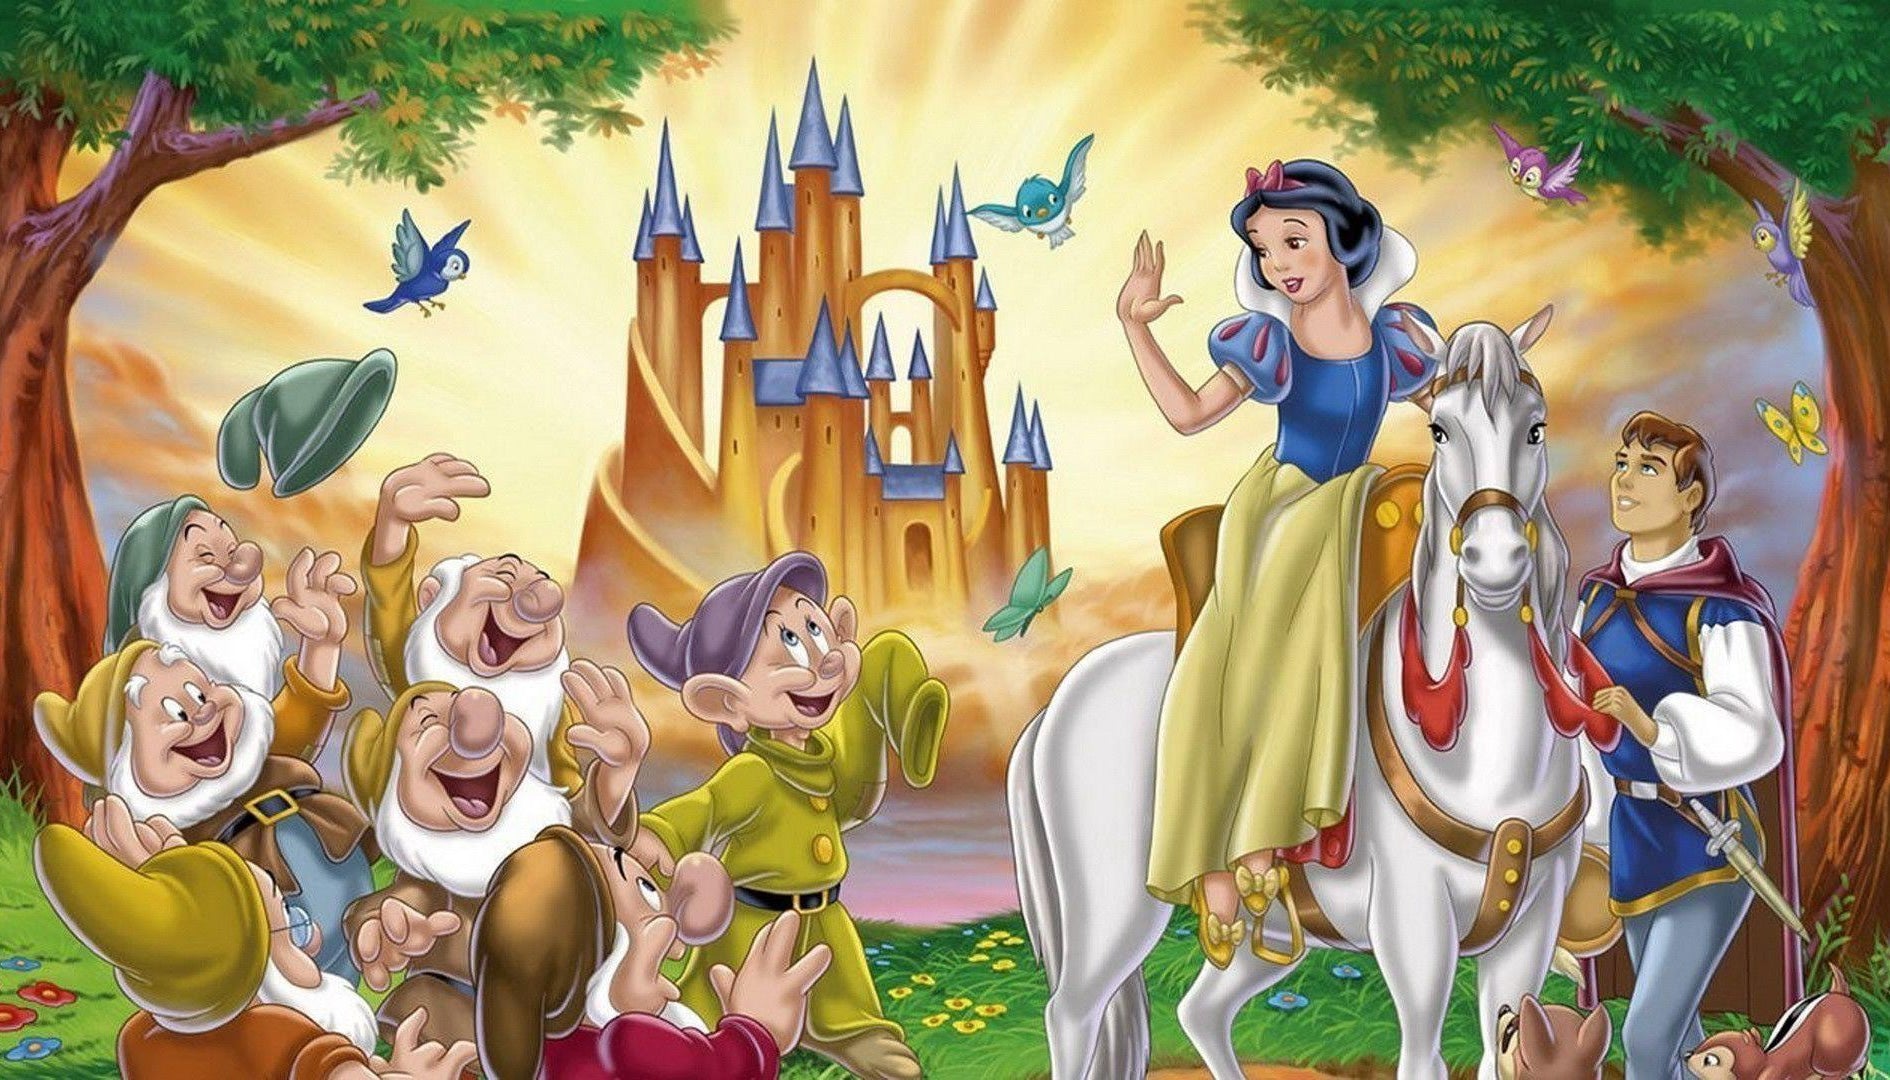 Snow White Disney Princess Costume Women Queen Fairytale Dress+